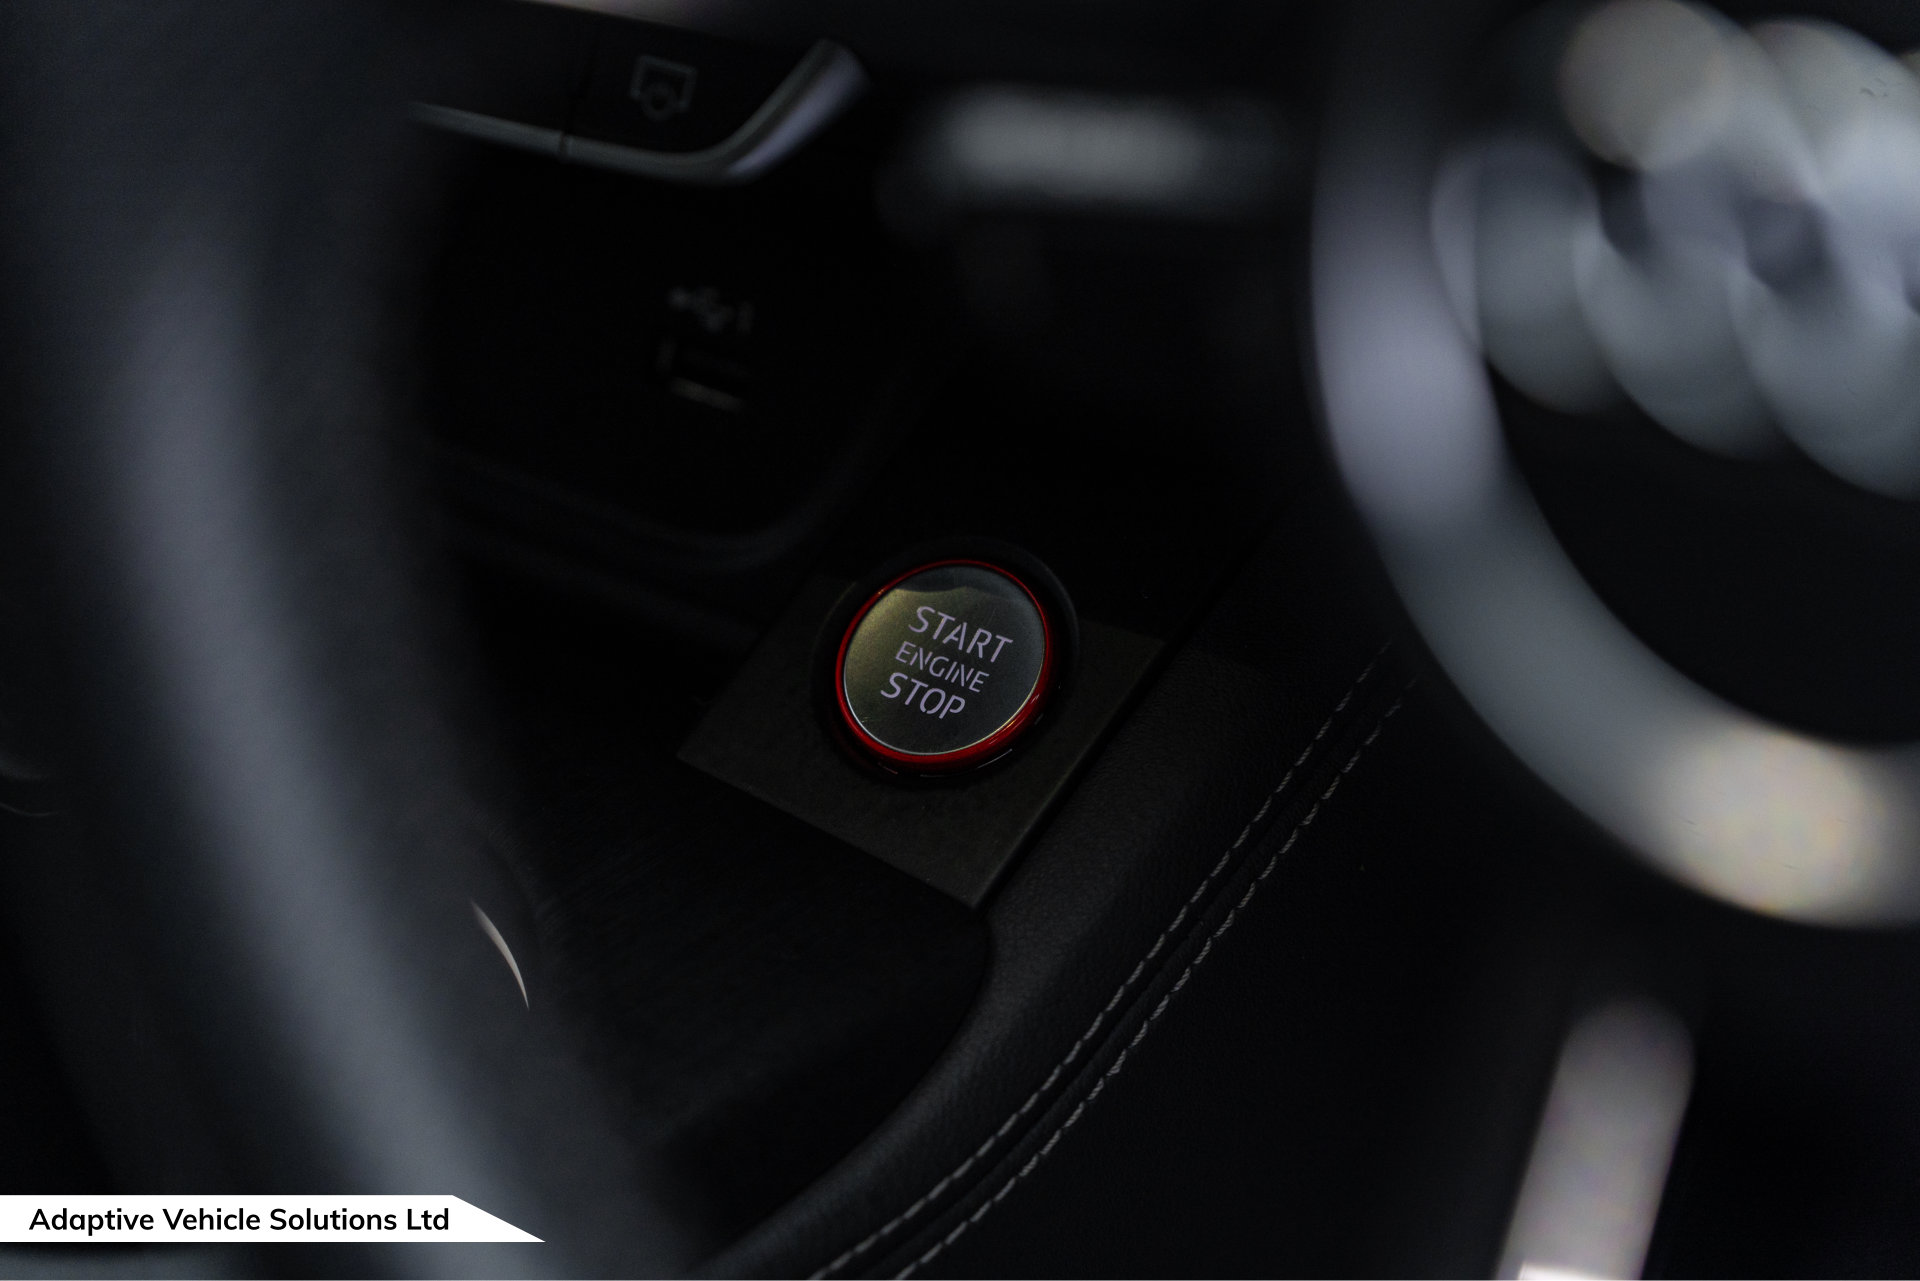 2019 Audi RS4 Avant Sport Edition Nardo Grey advanced key